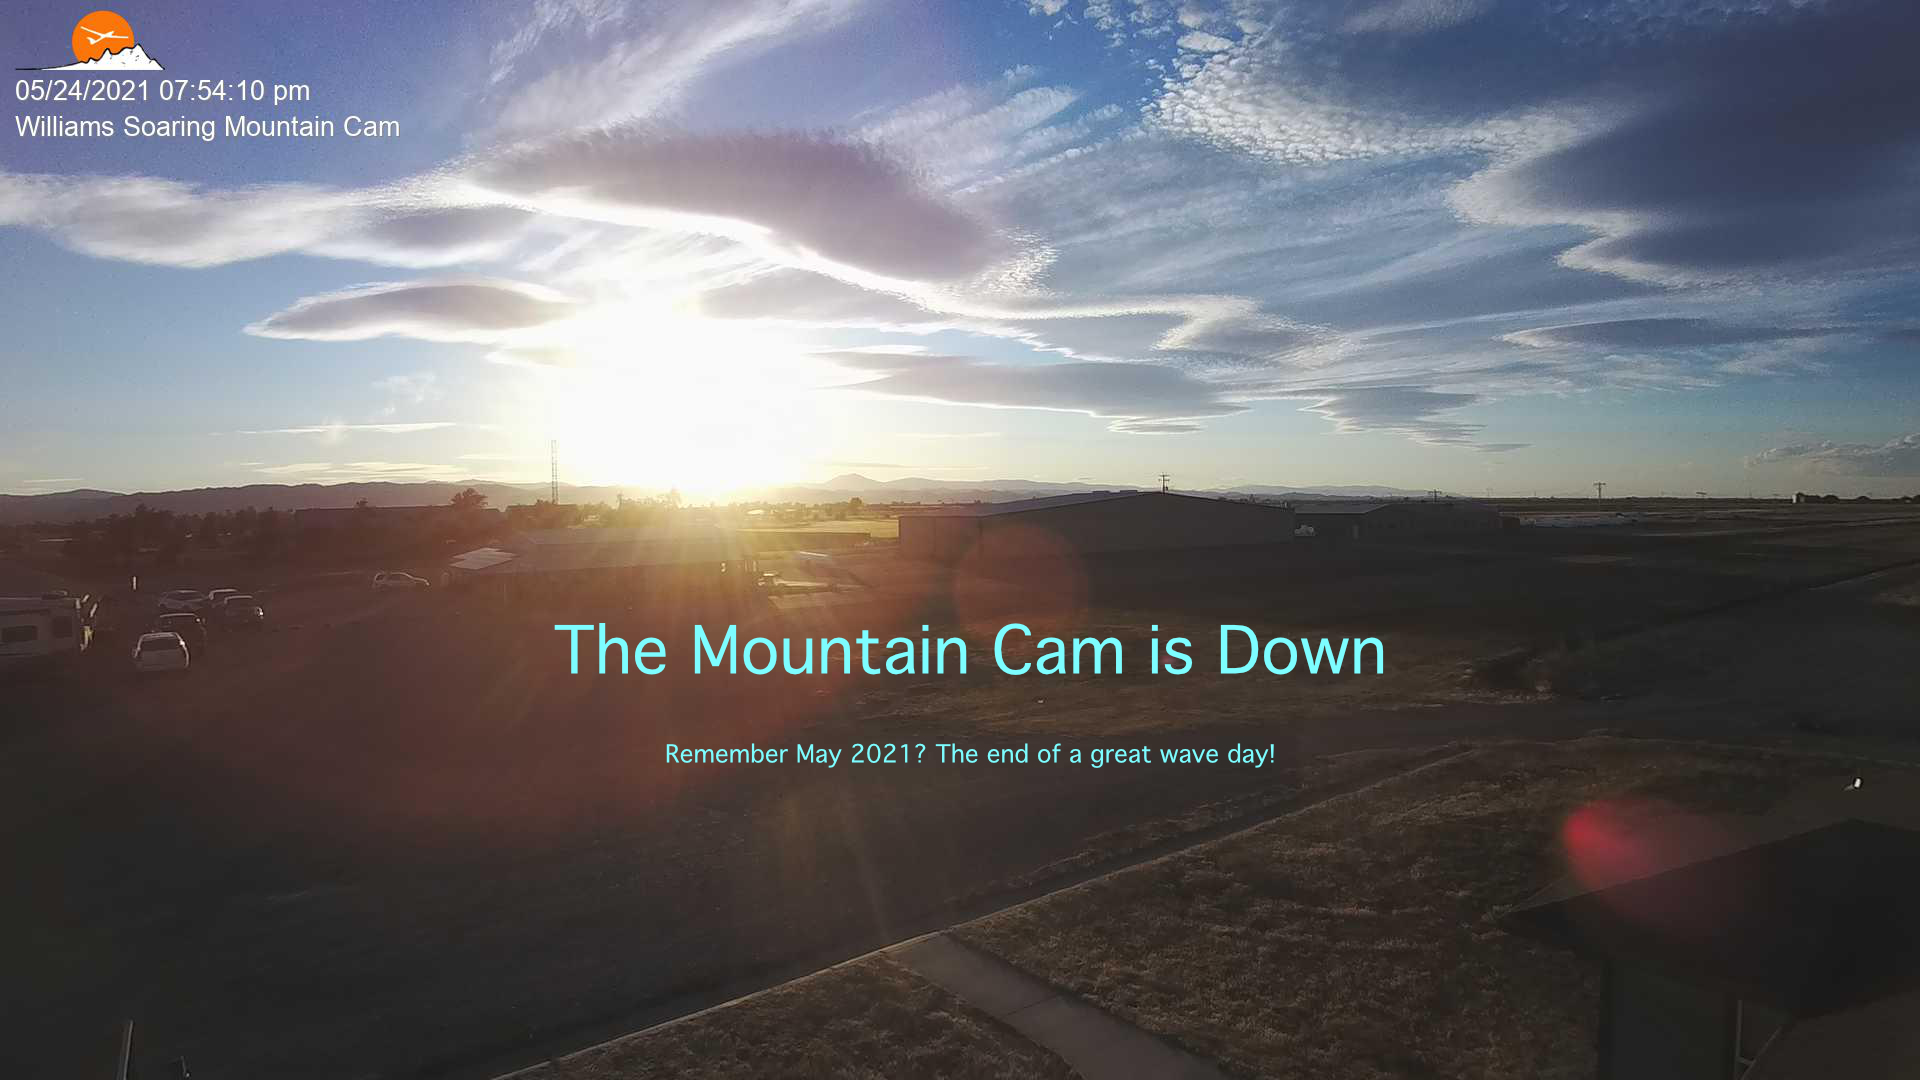 Williams Soaring Mountain Cam